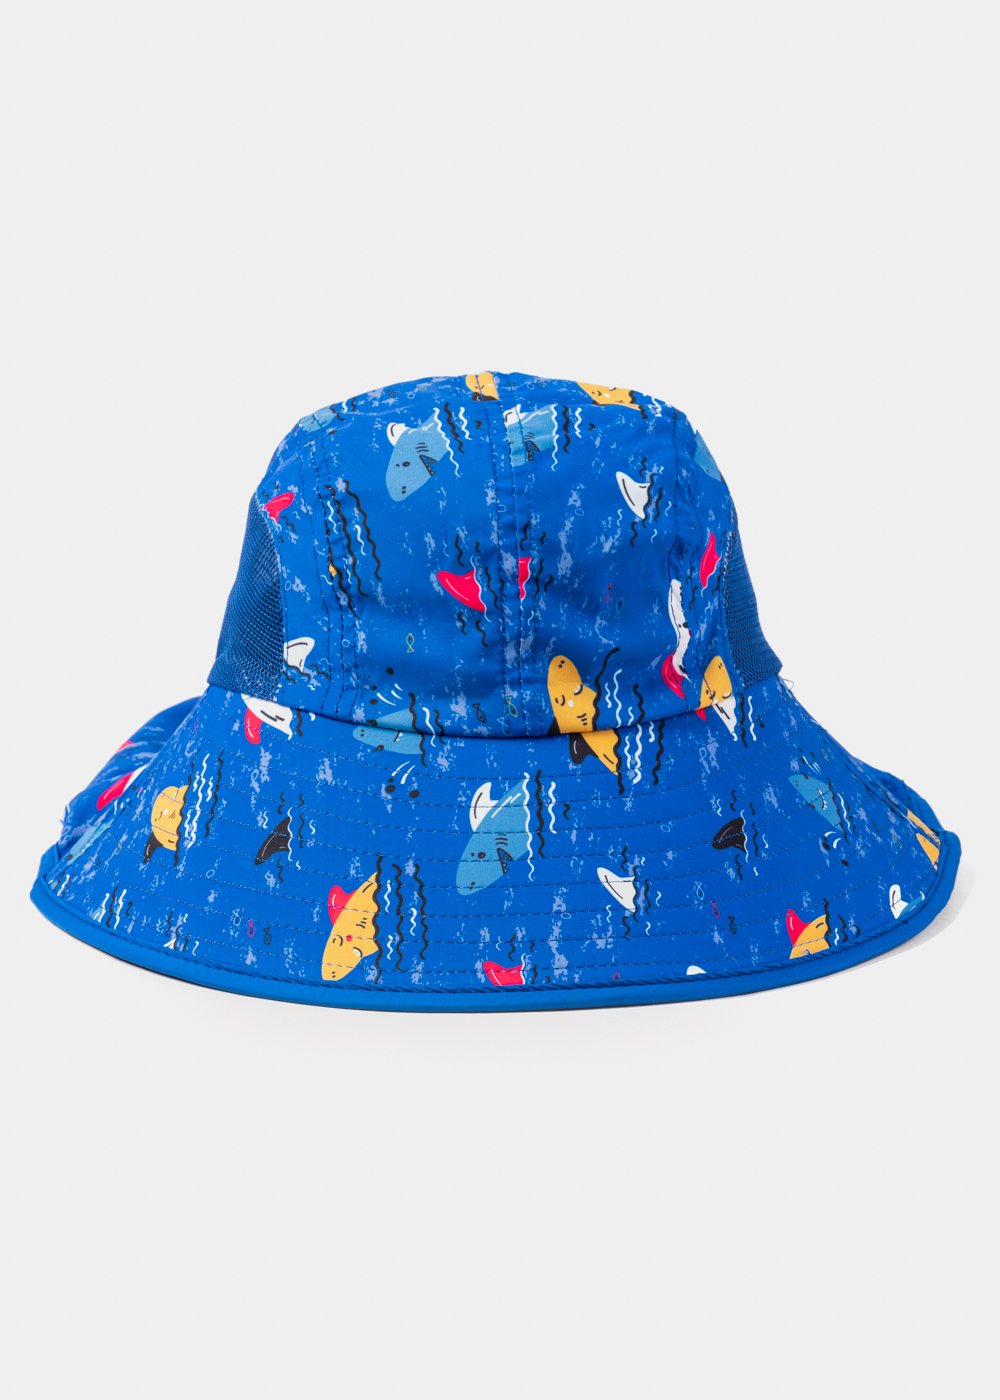 Blue Kids Bucket Hat w/ Neck Protector 